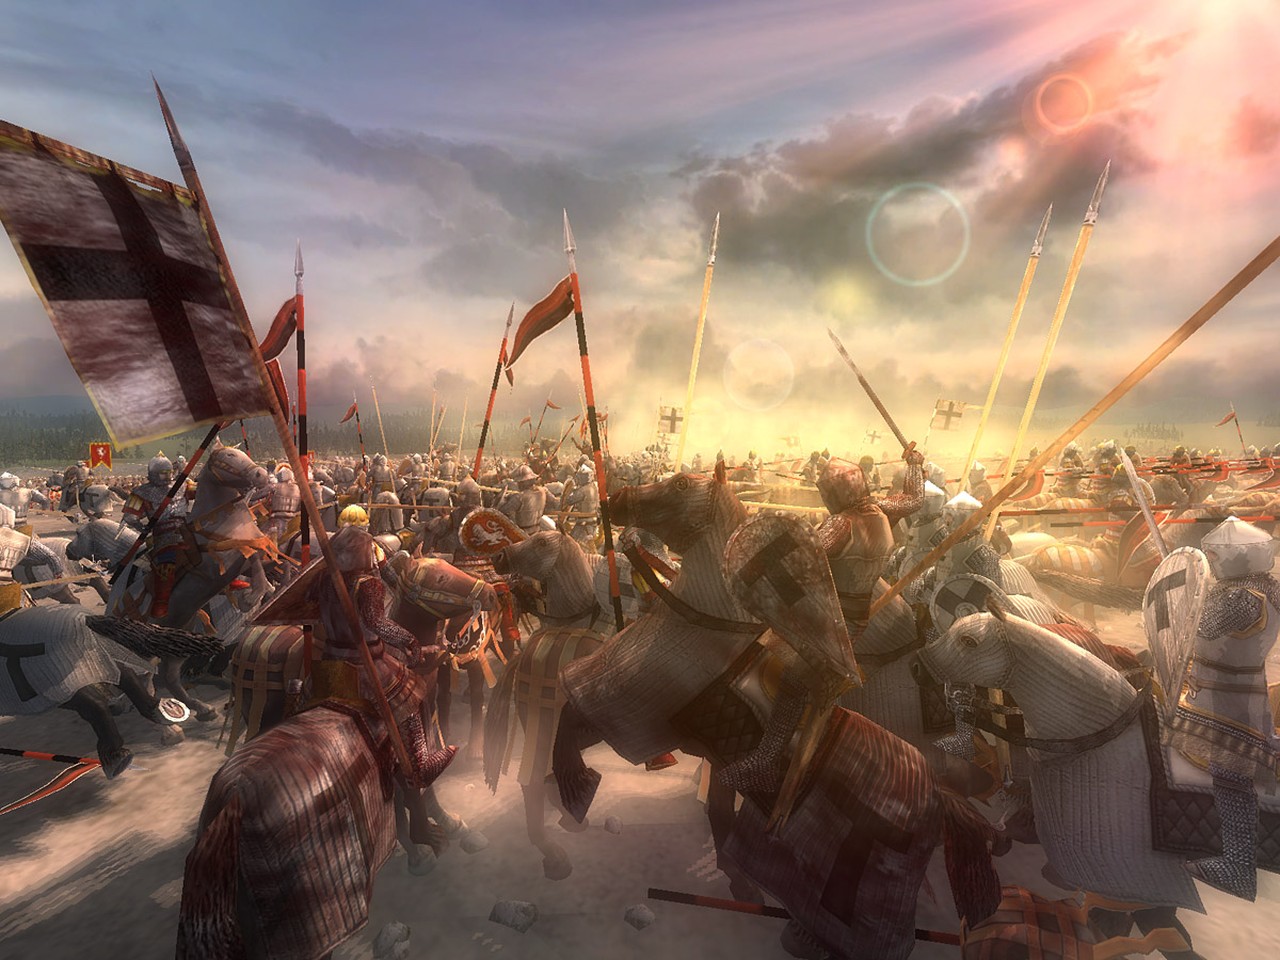 По каким дням выходит битва. Битва Ледовое побоище 1242.